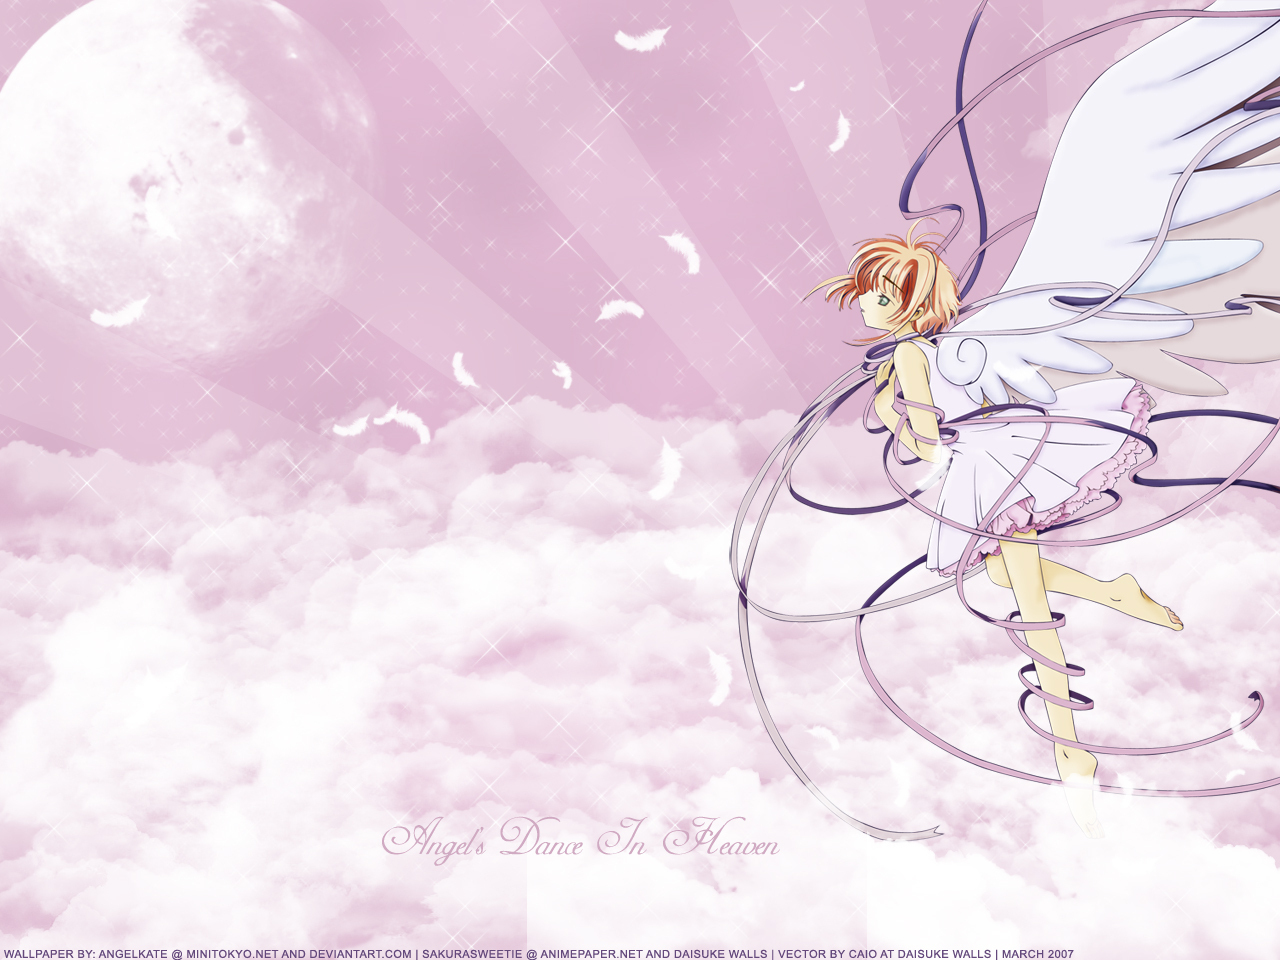 Cardcaptor Sakura Image HD Wallpaper And